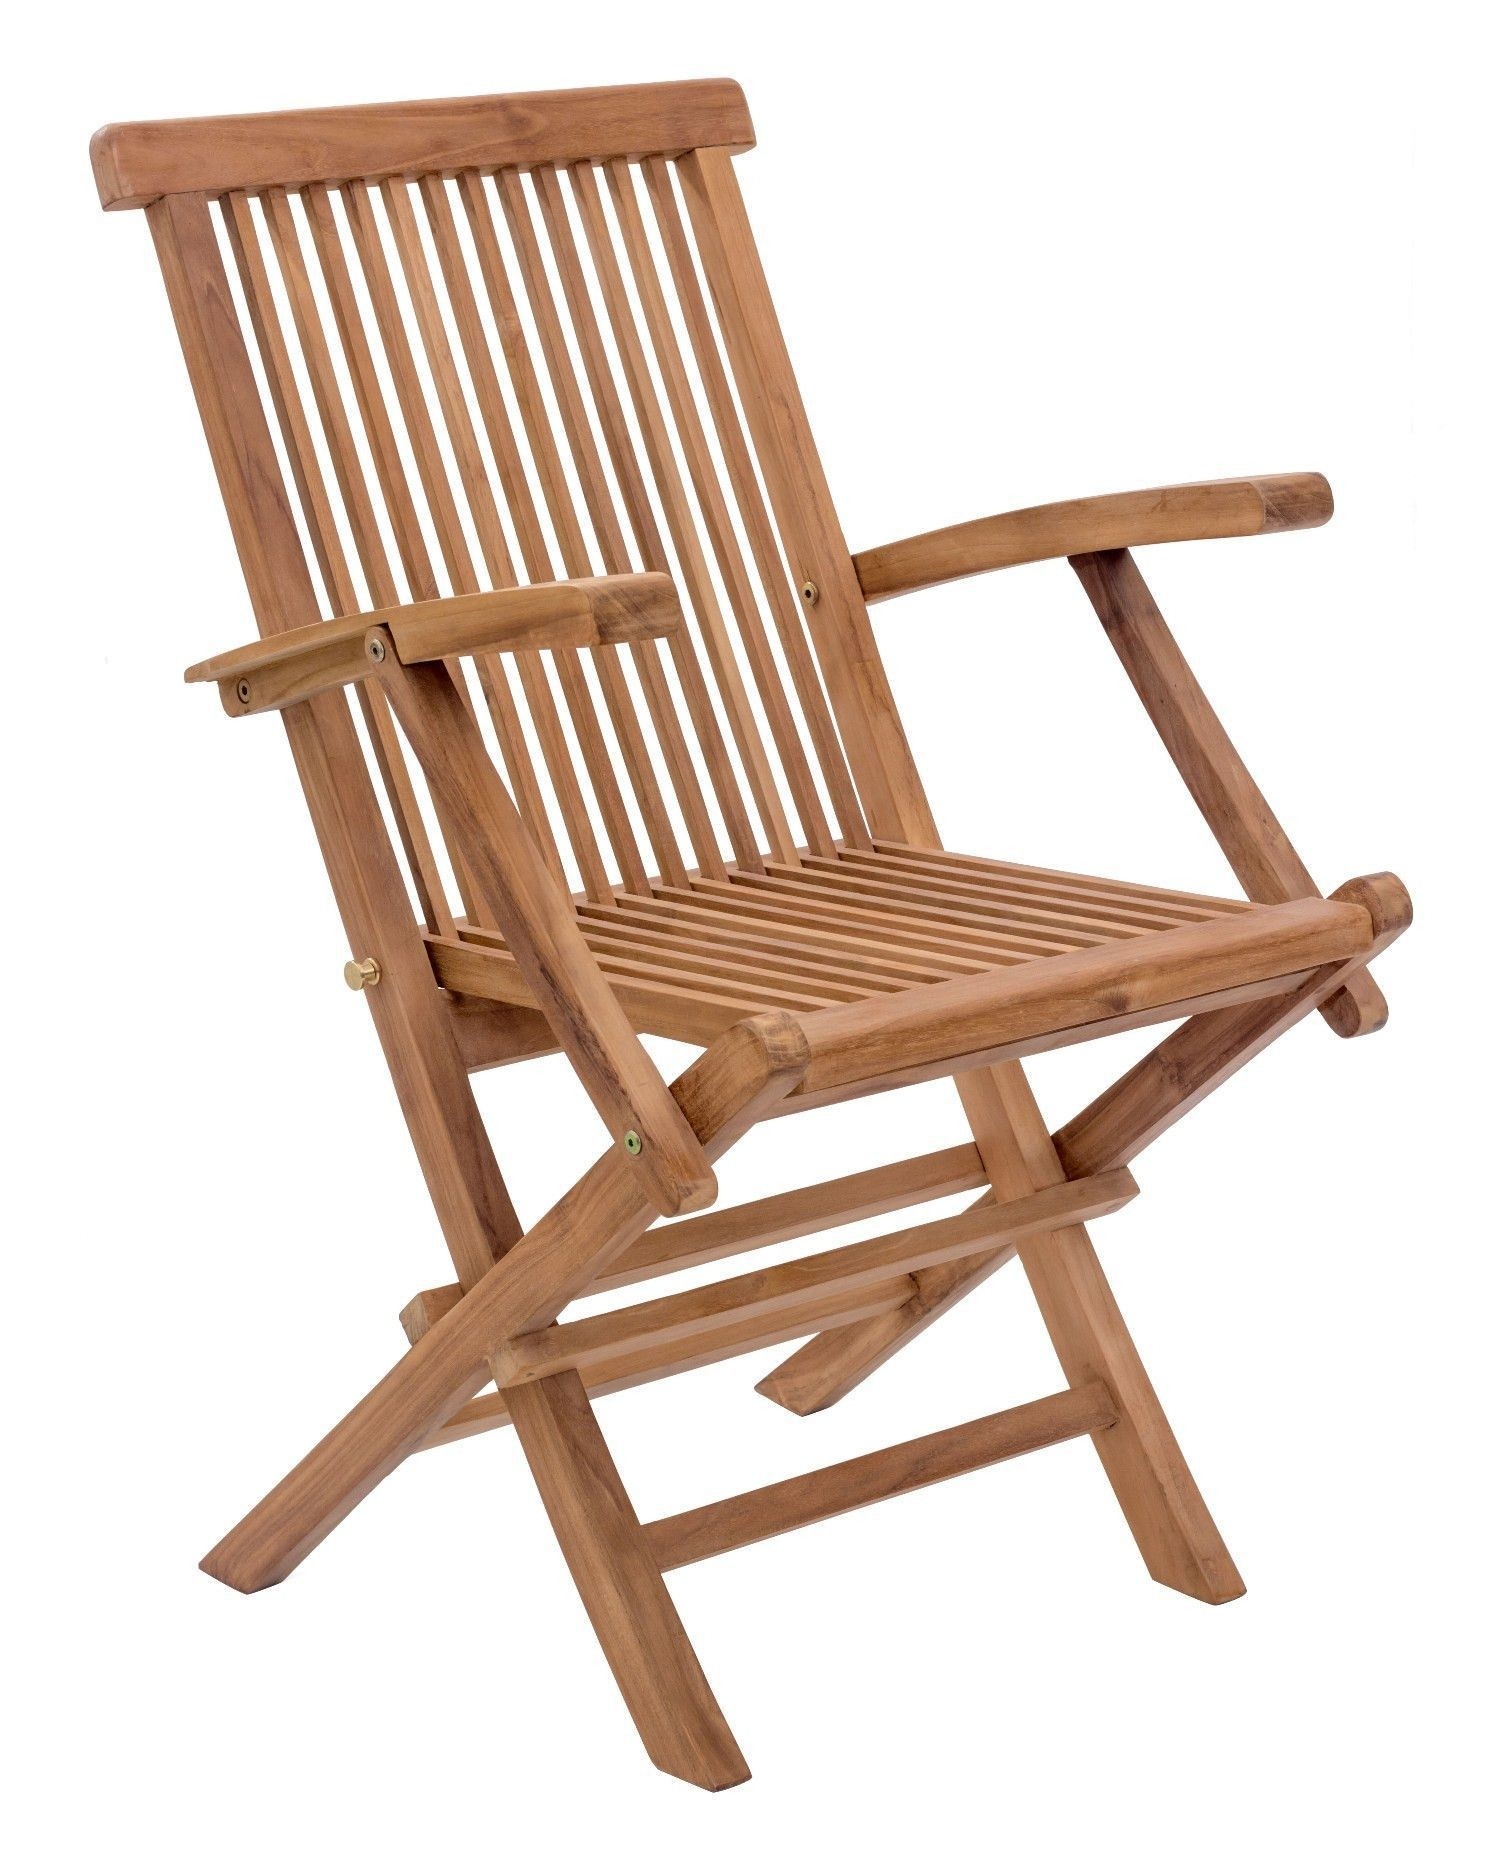 The zuo modern regatta teak wood folding arm chair casts